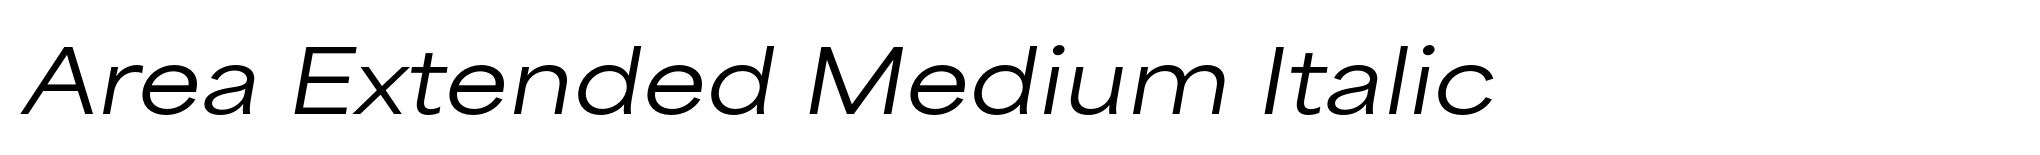 Area Extended Medium Italic image